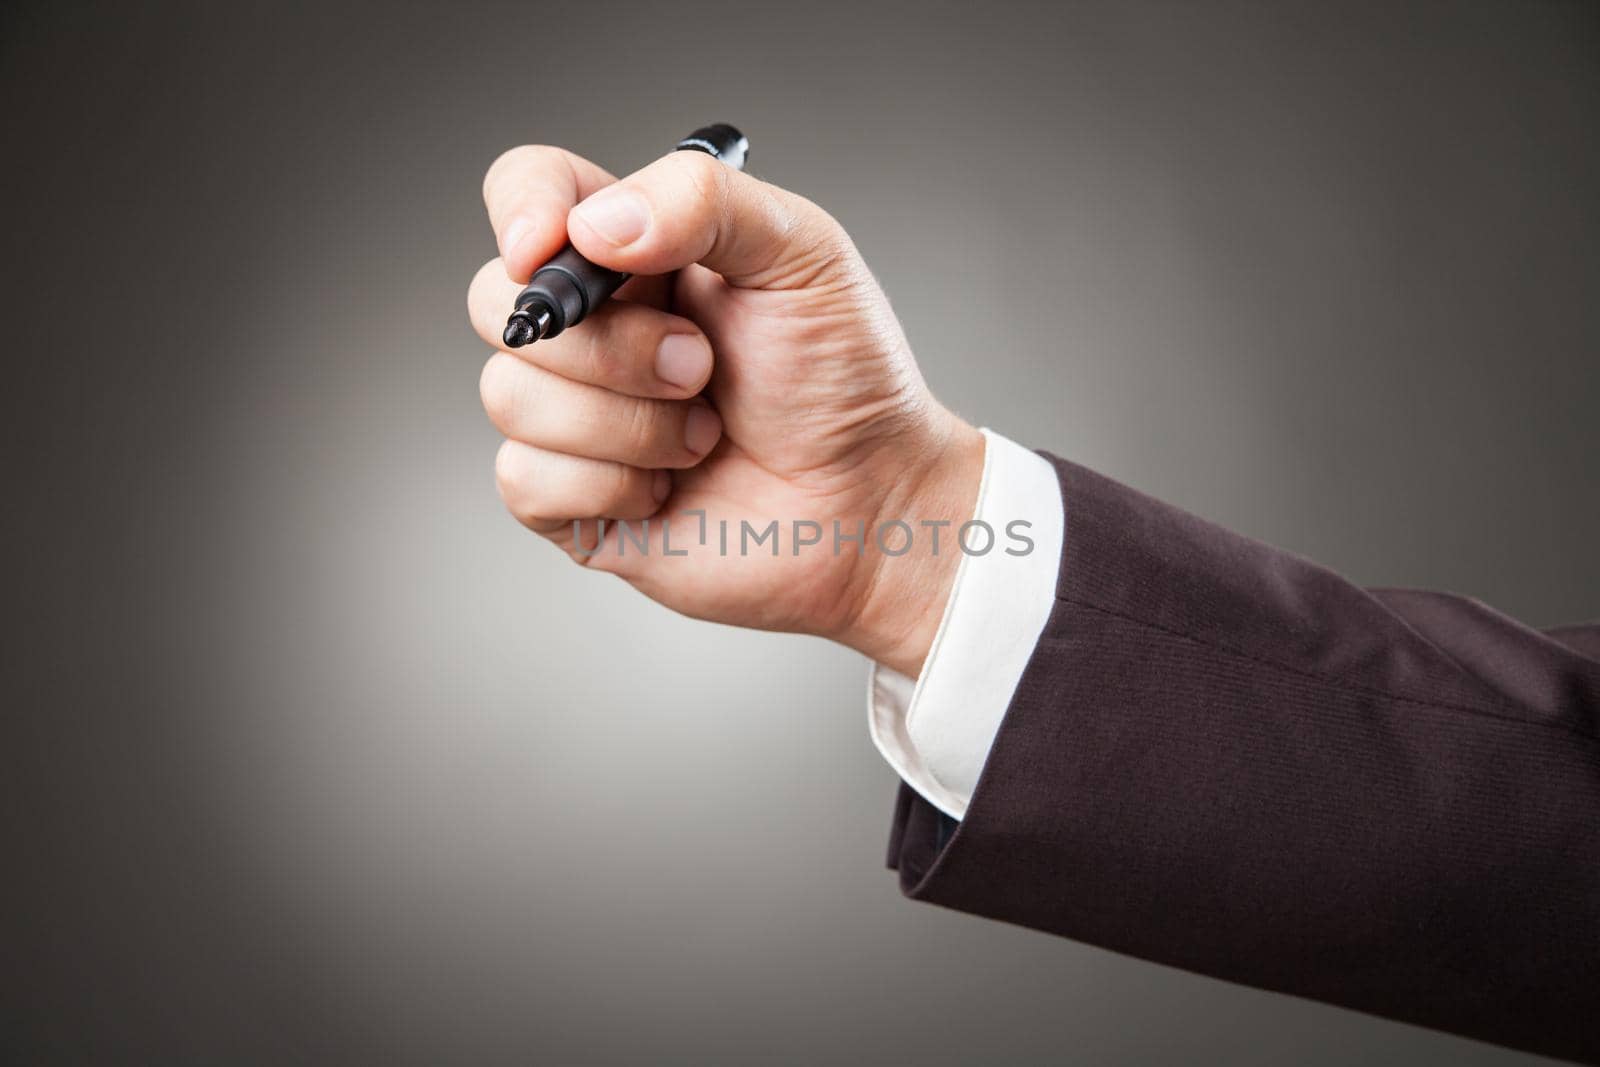 Hand of man wearing suit holding black marker. Horizontal studio shot